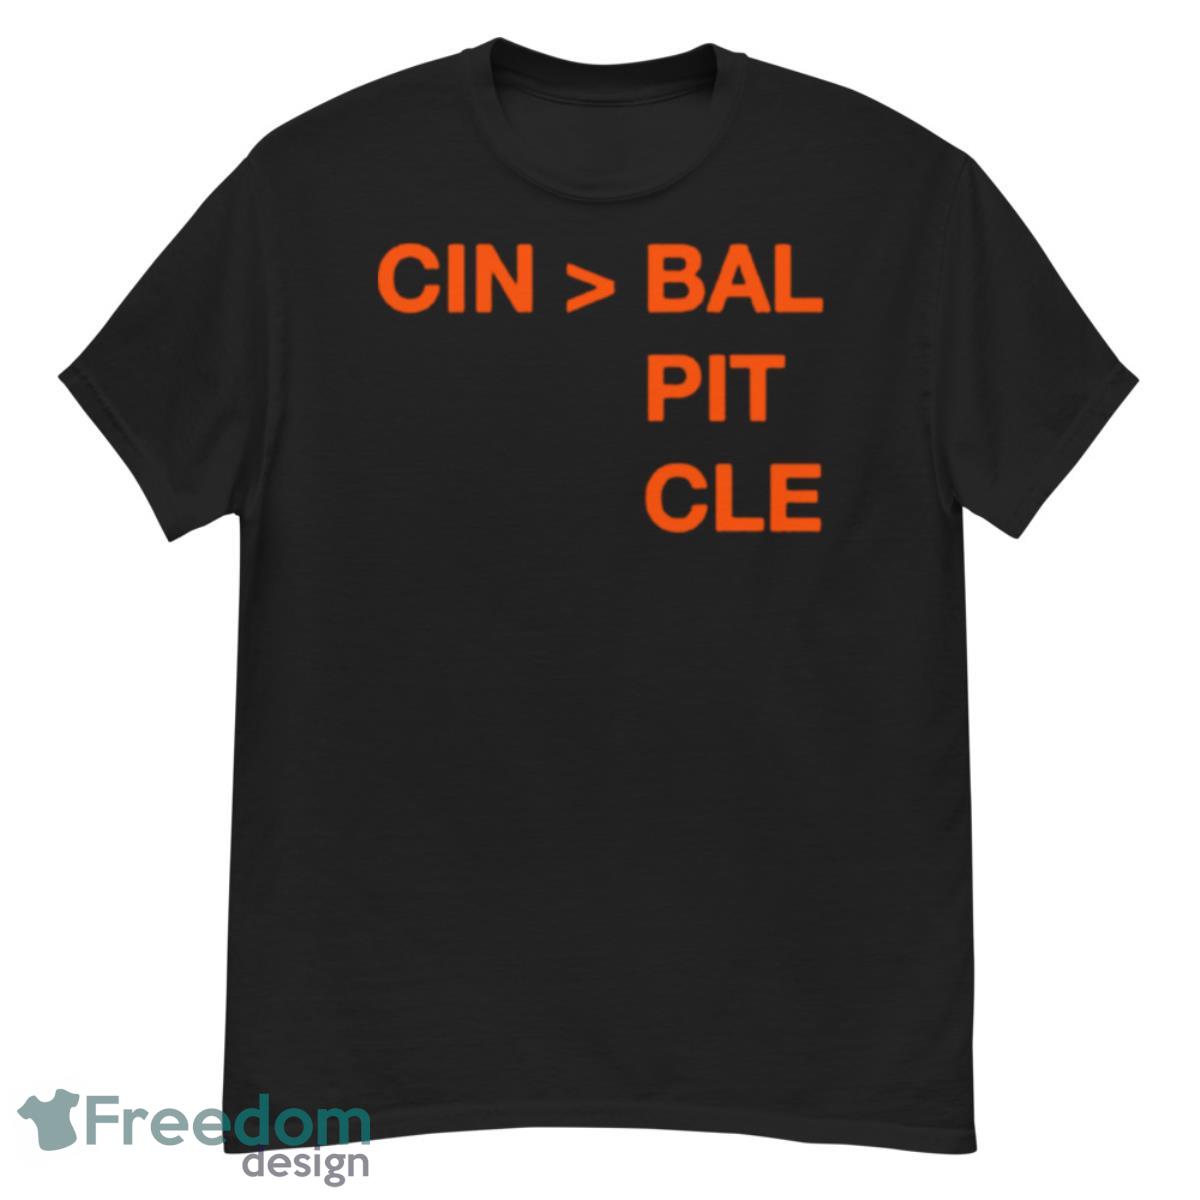 Cin more than Bal Pit Cle shirt - G500 Men’s Classic T-Shirt